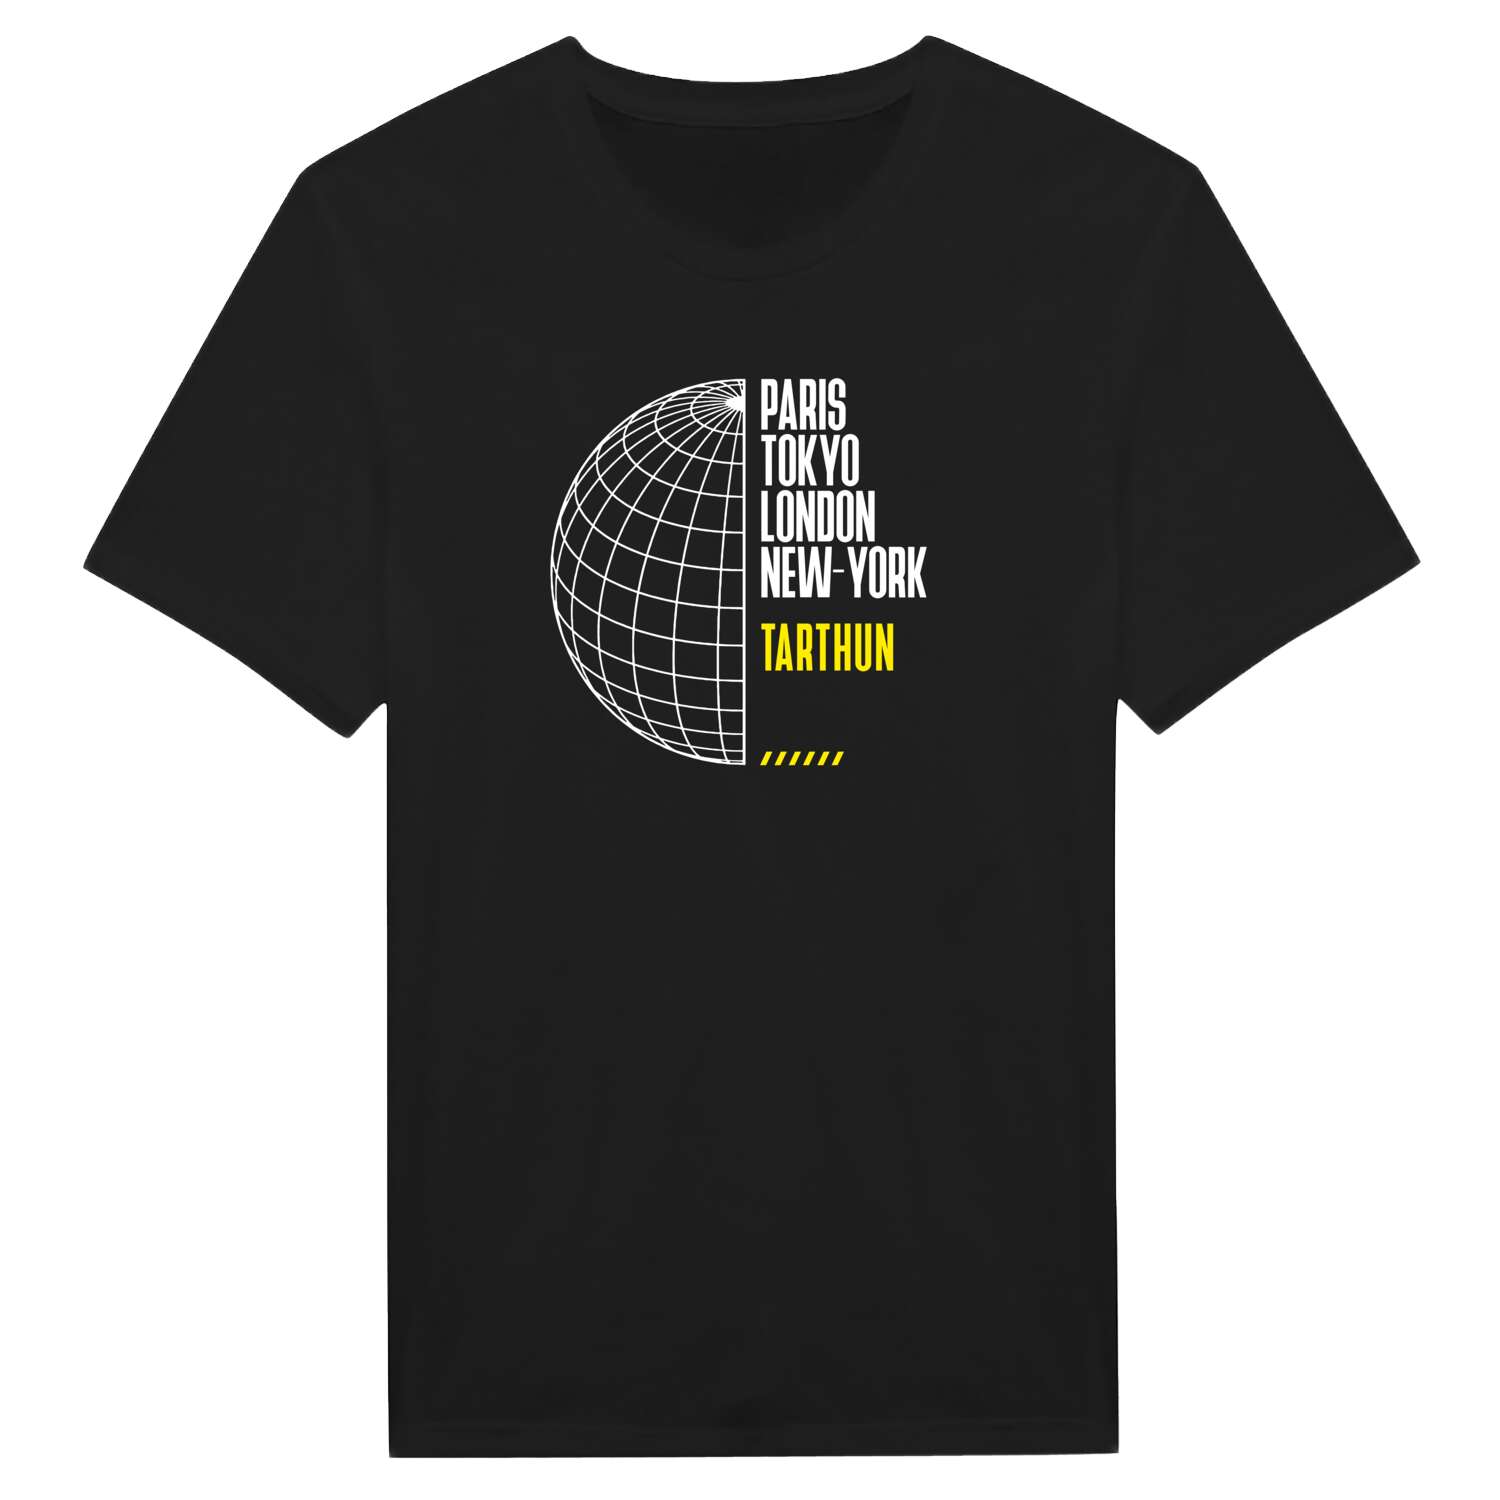 Tarthun T-Shirt »Paris Tokyo London«